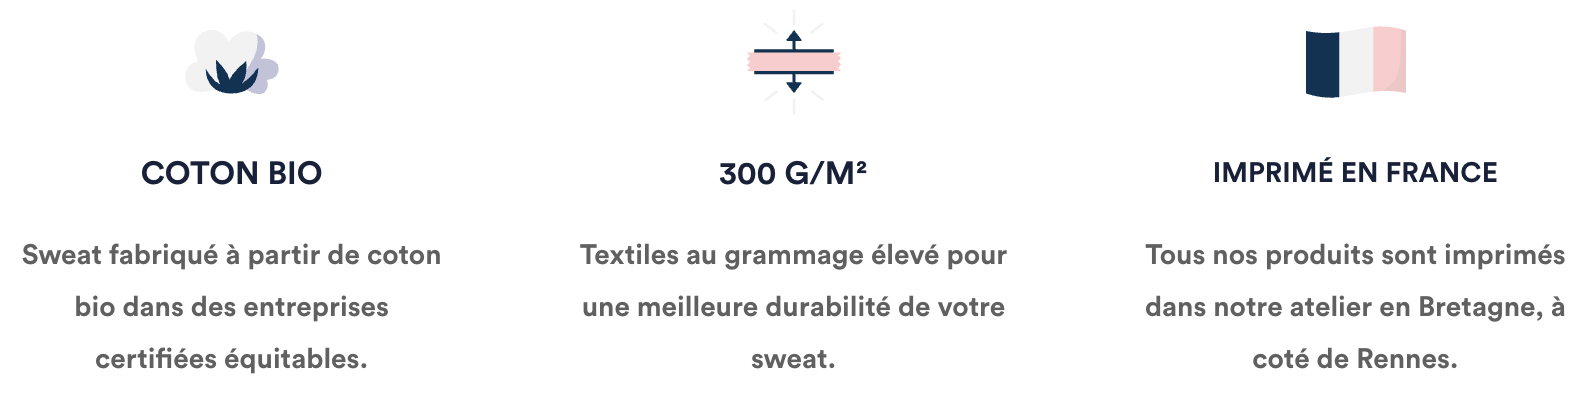 Coton bio grammage made in france